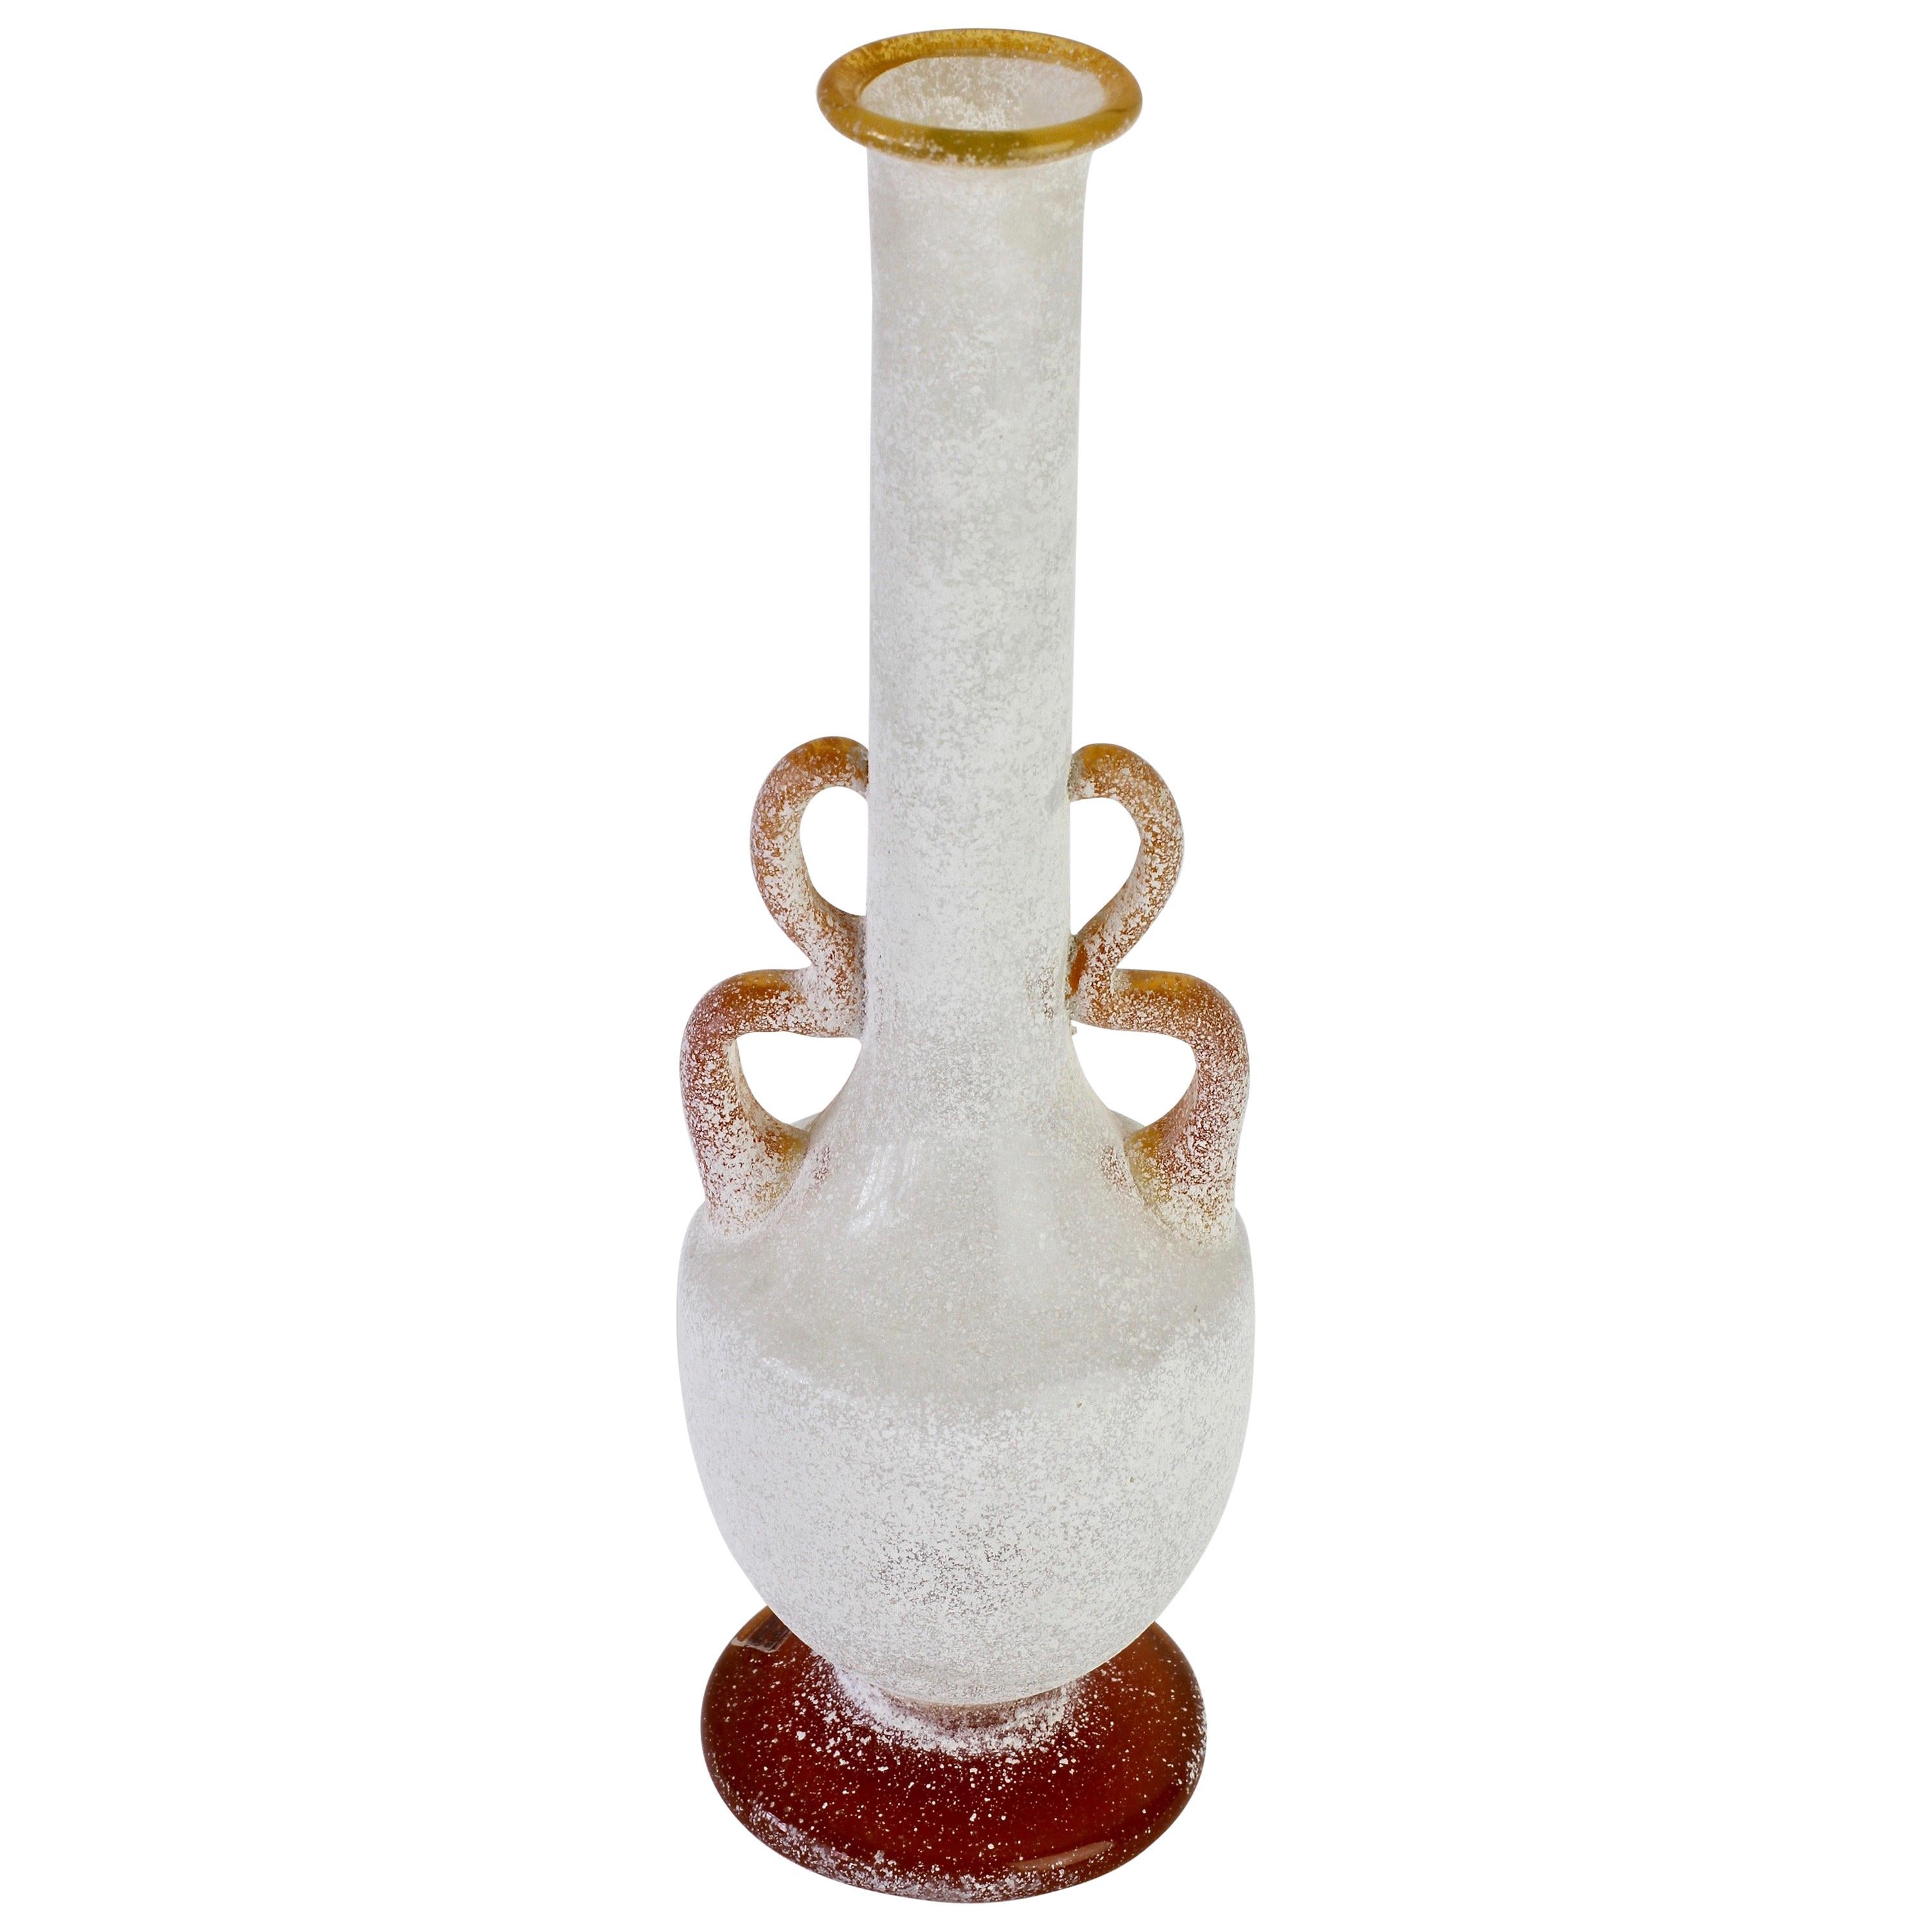 Vieux vase en verre de Murano « a Scavo » en ambre et blanc Seguso Vetri D'Arte